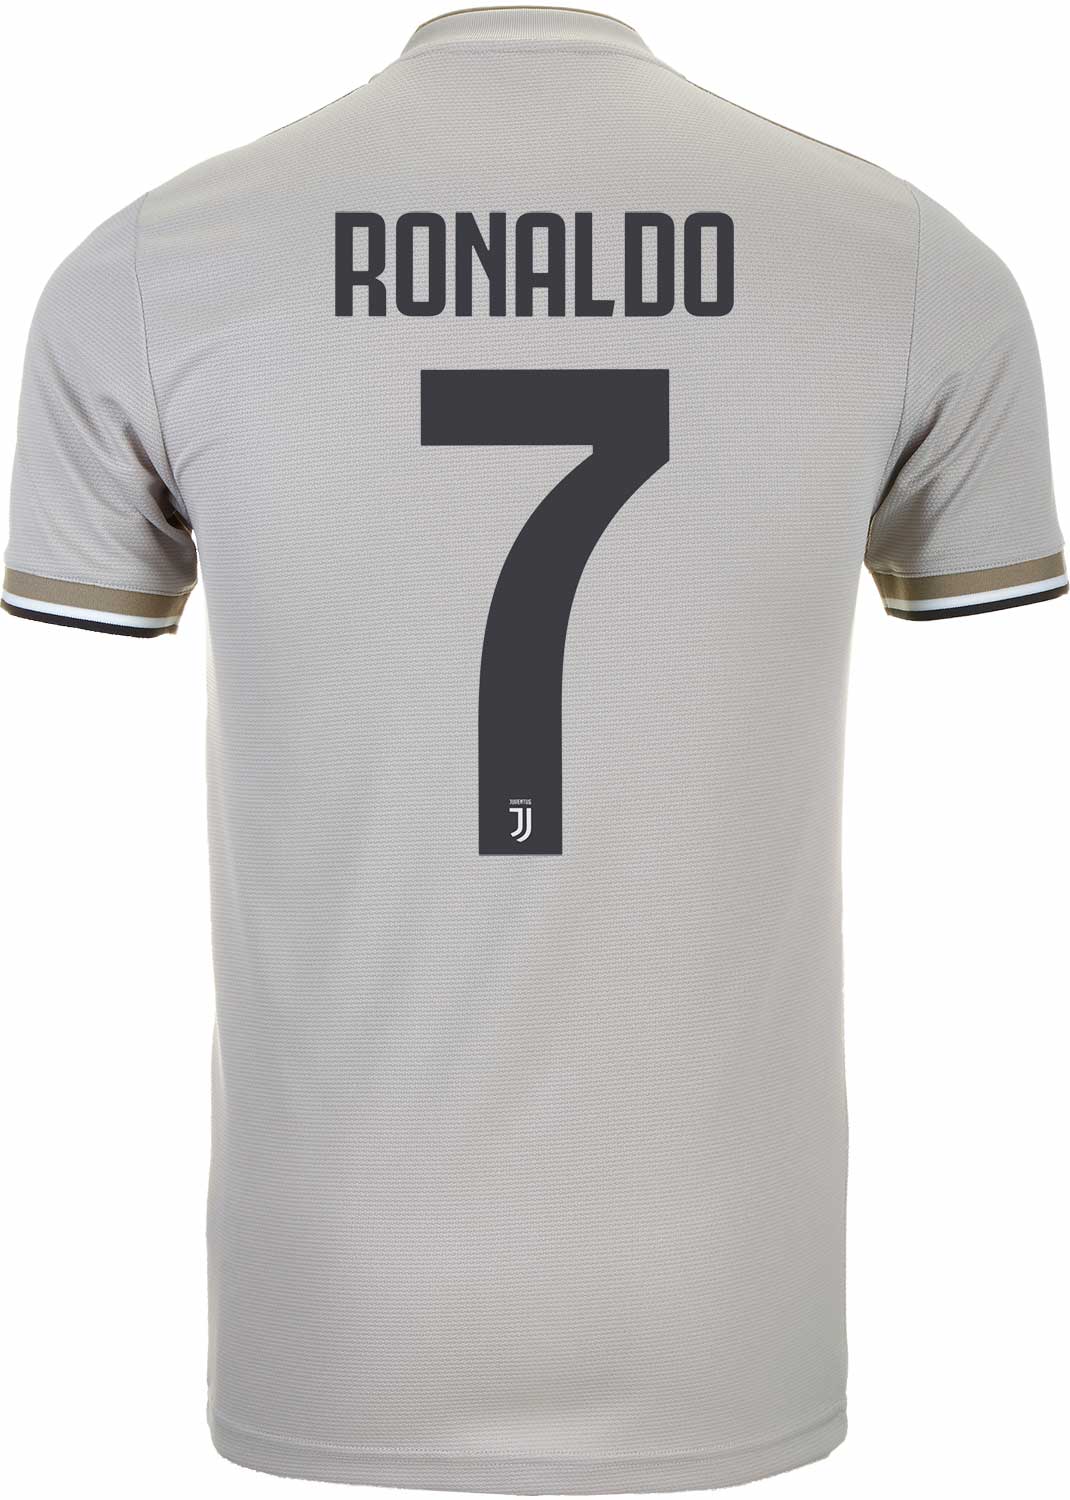 2018/19 New Juventus Ronaldo Kids Soccer Jersey L